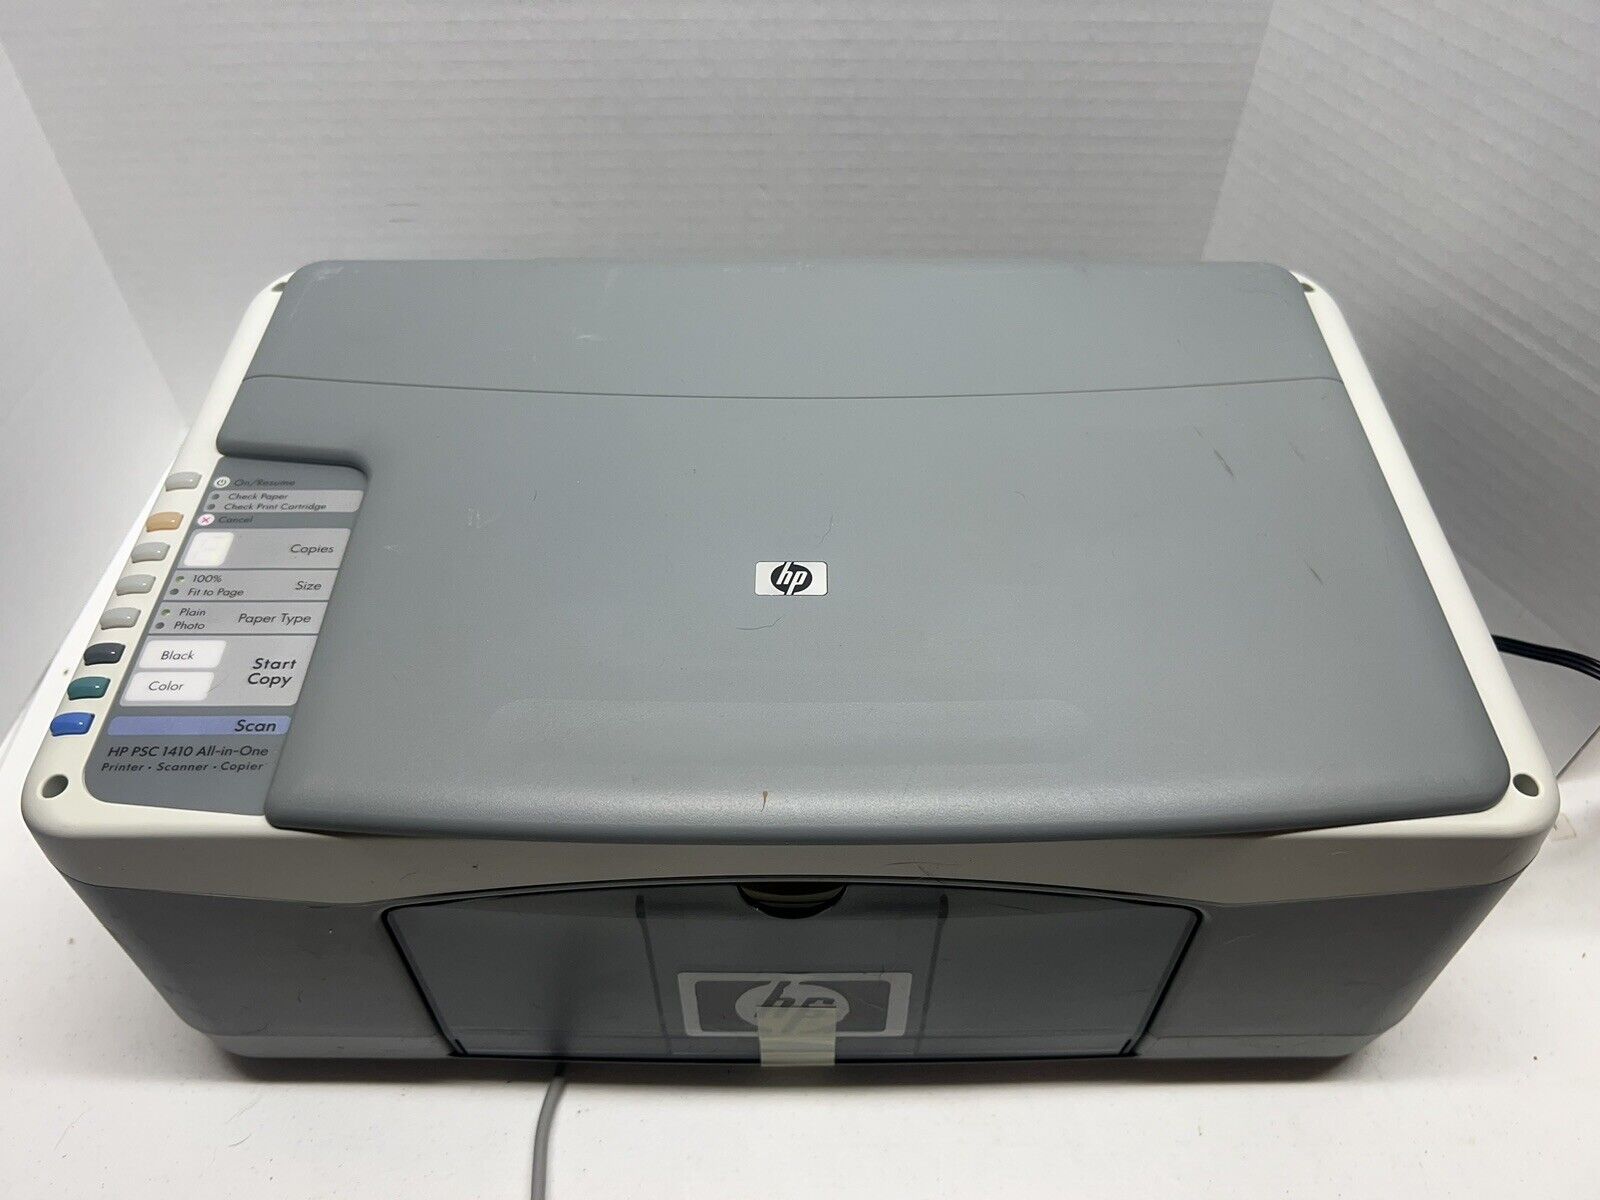 HP PSC 1410 All-In-One Inkjet Printer Scanner Copier